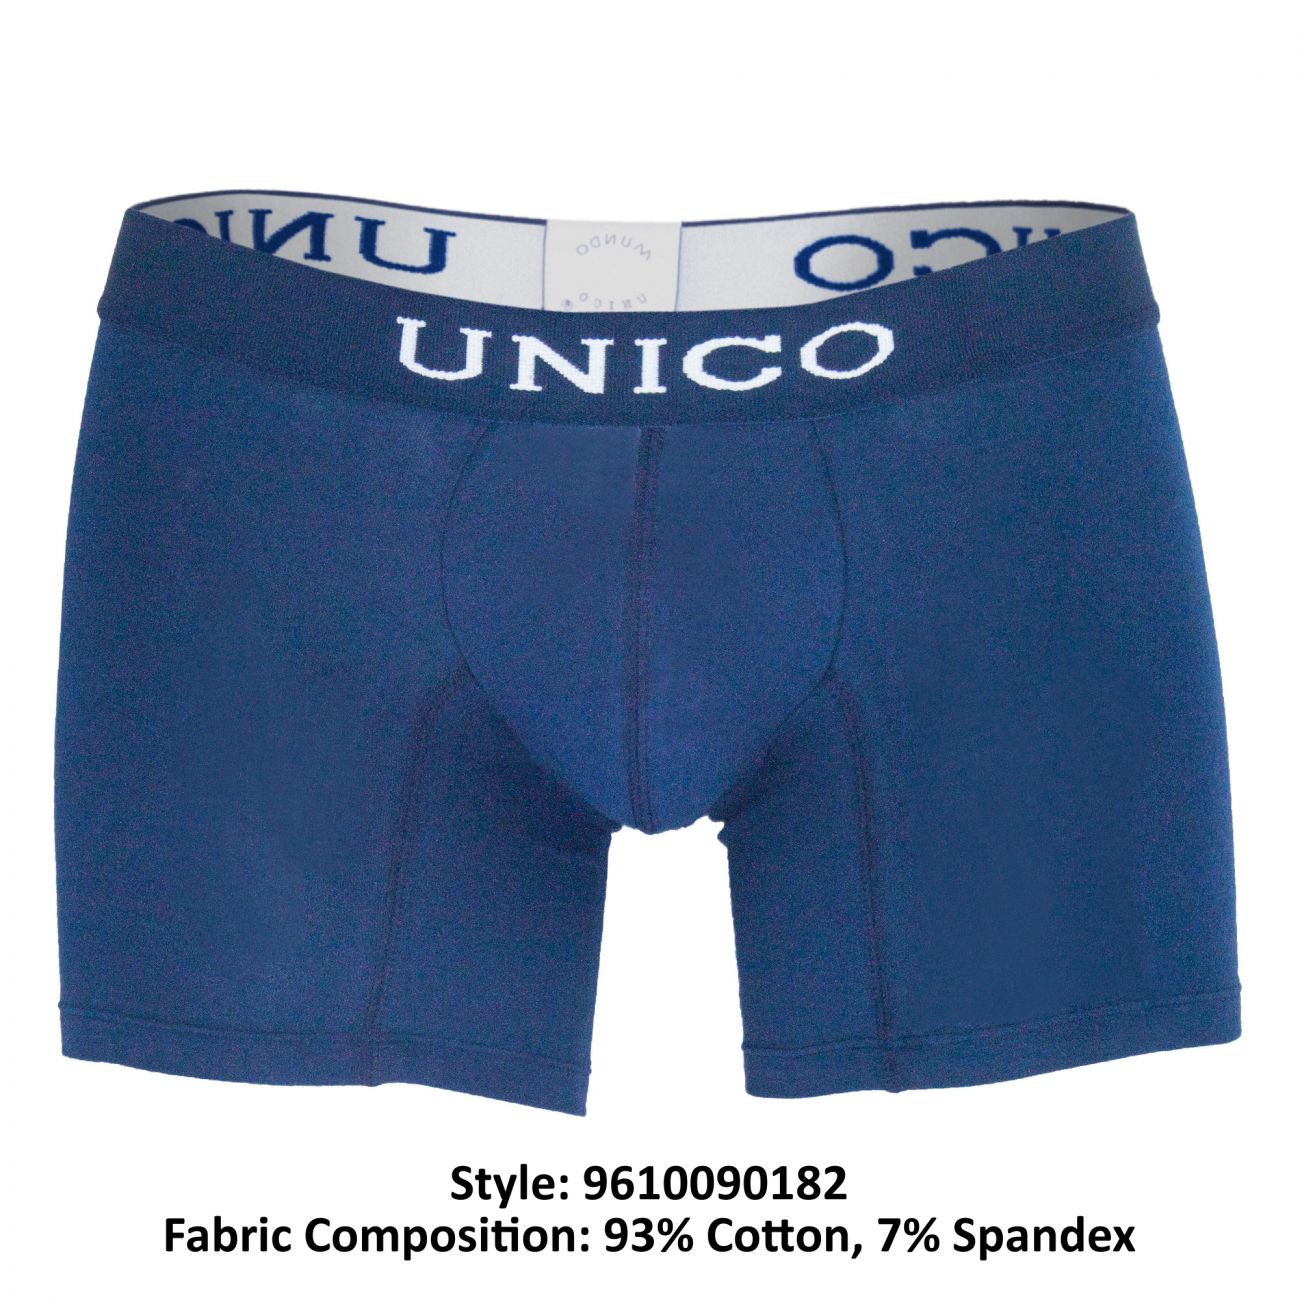 Mens Underwear: Unico 9610090182 Boxer Briefs Profundo | eBay